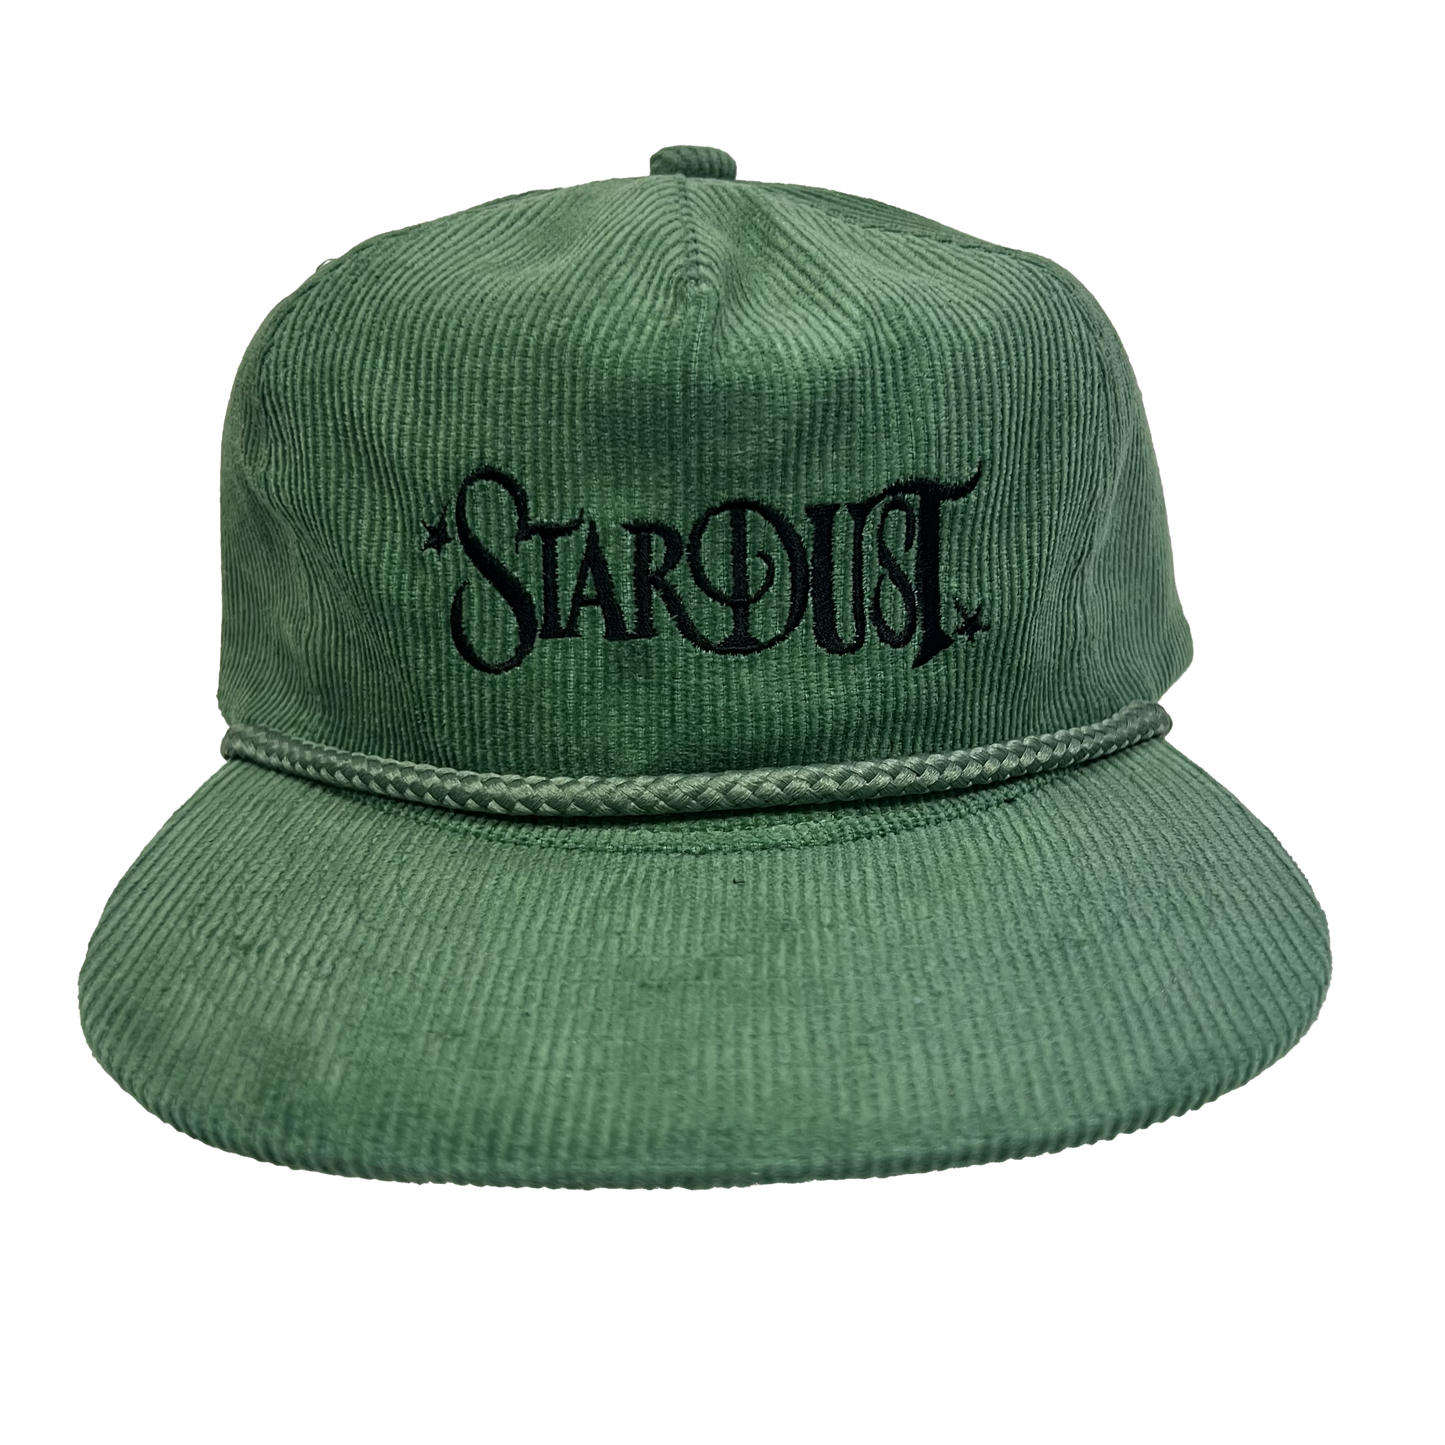 Stardust Wanderlust II Corduroy Snapback Hat 004 Spruce / Black